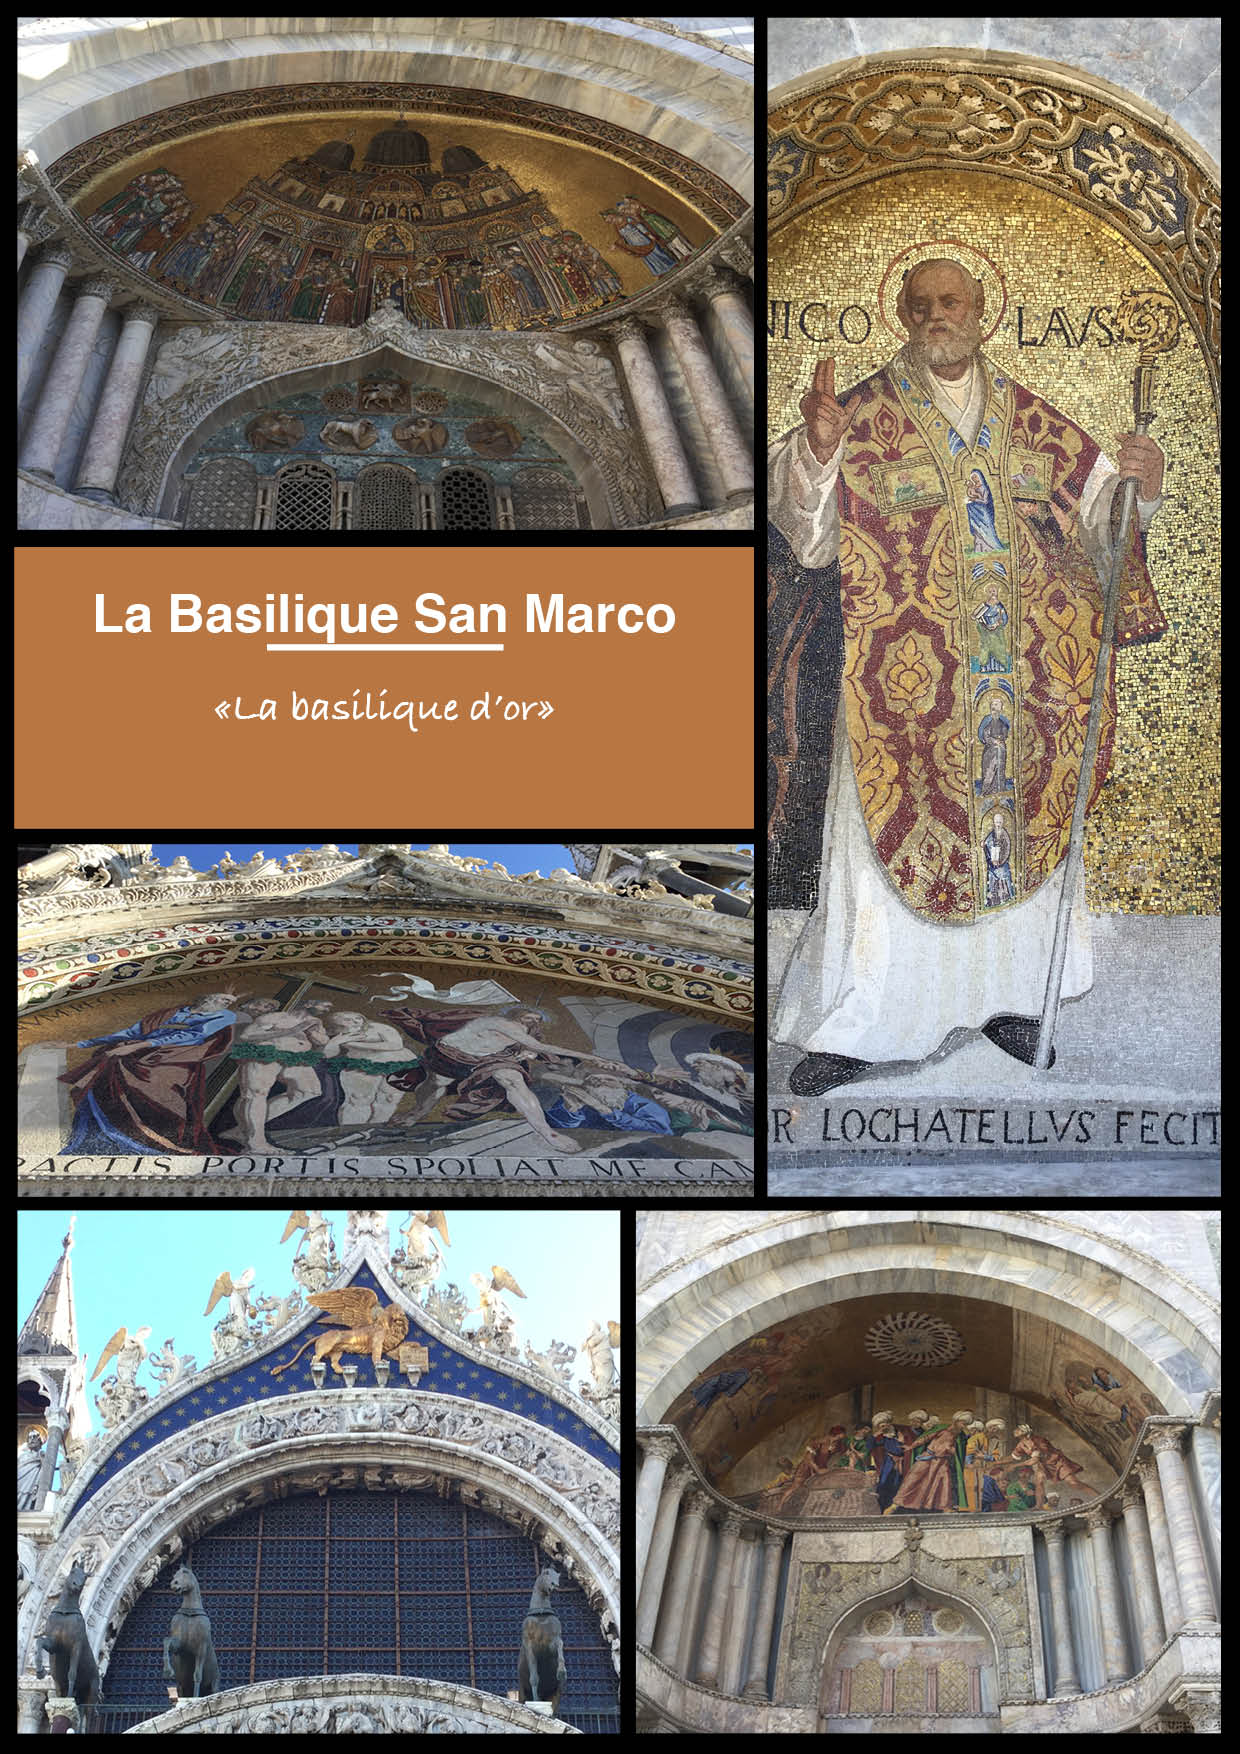 La façade en mosaïque de la basilique San Marco